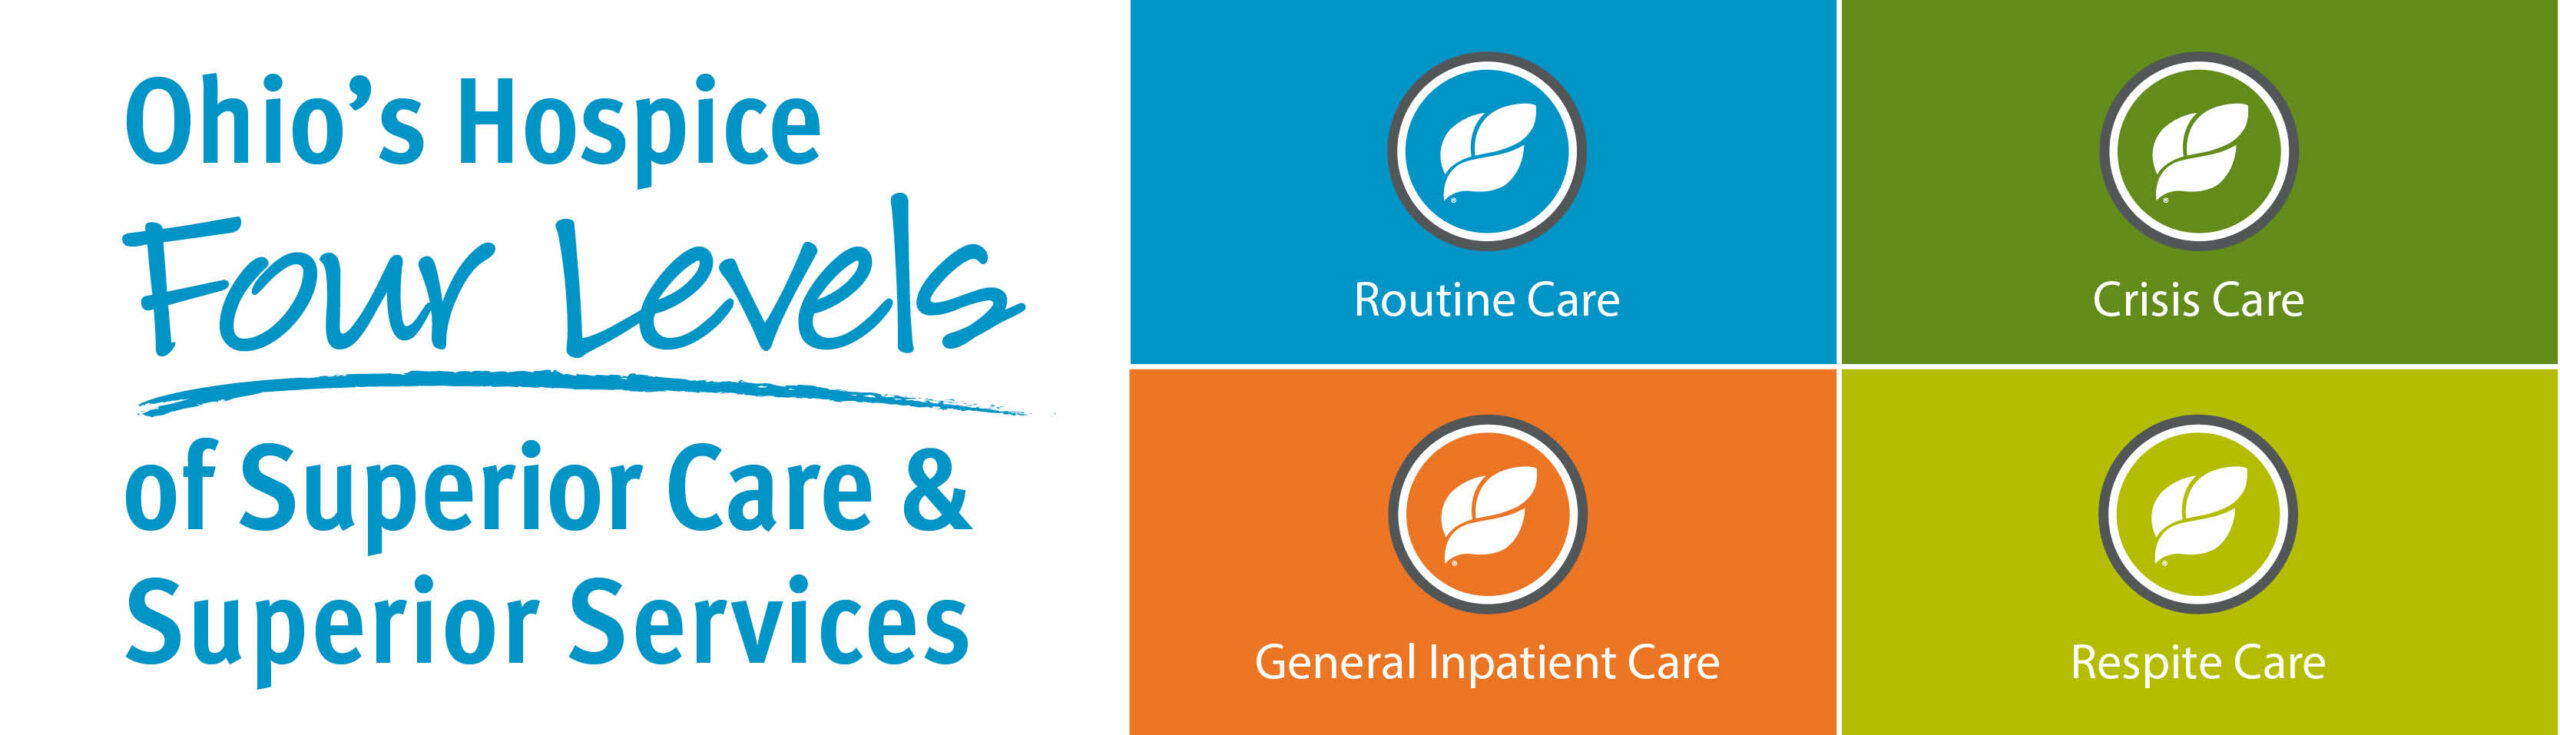 Ohio's Hospice Four Levels of Superior Care & Superior Services